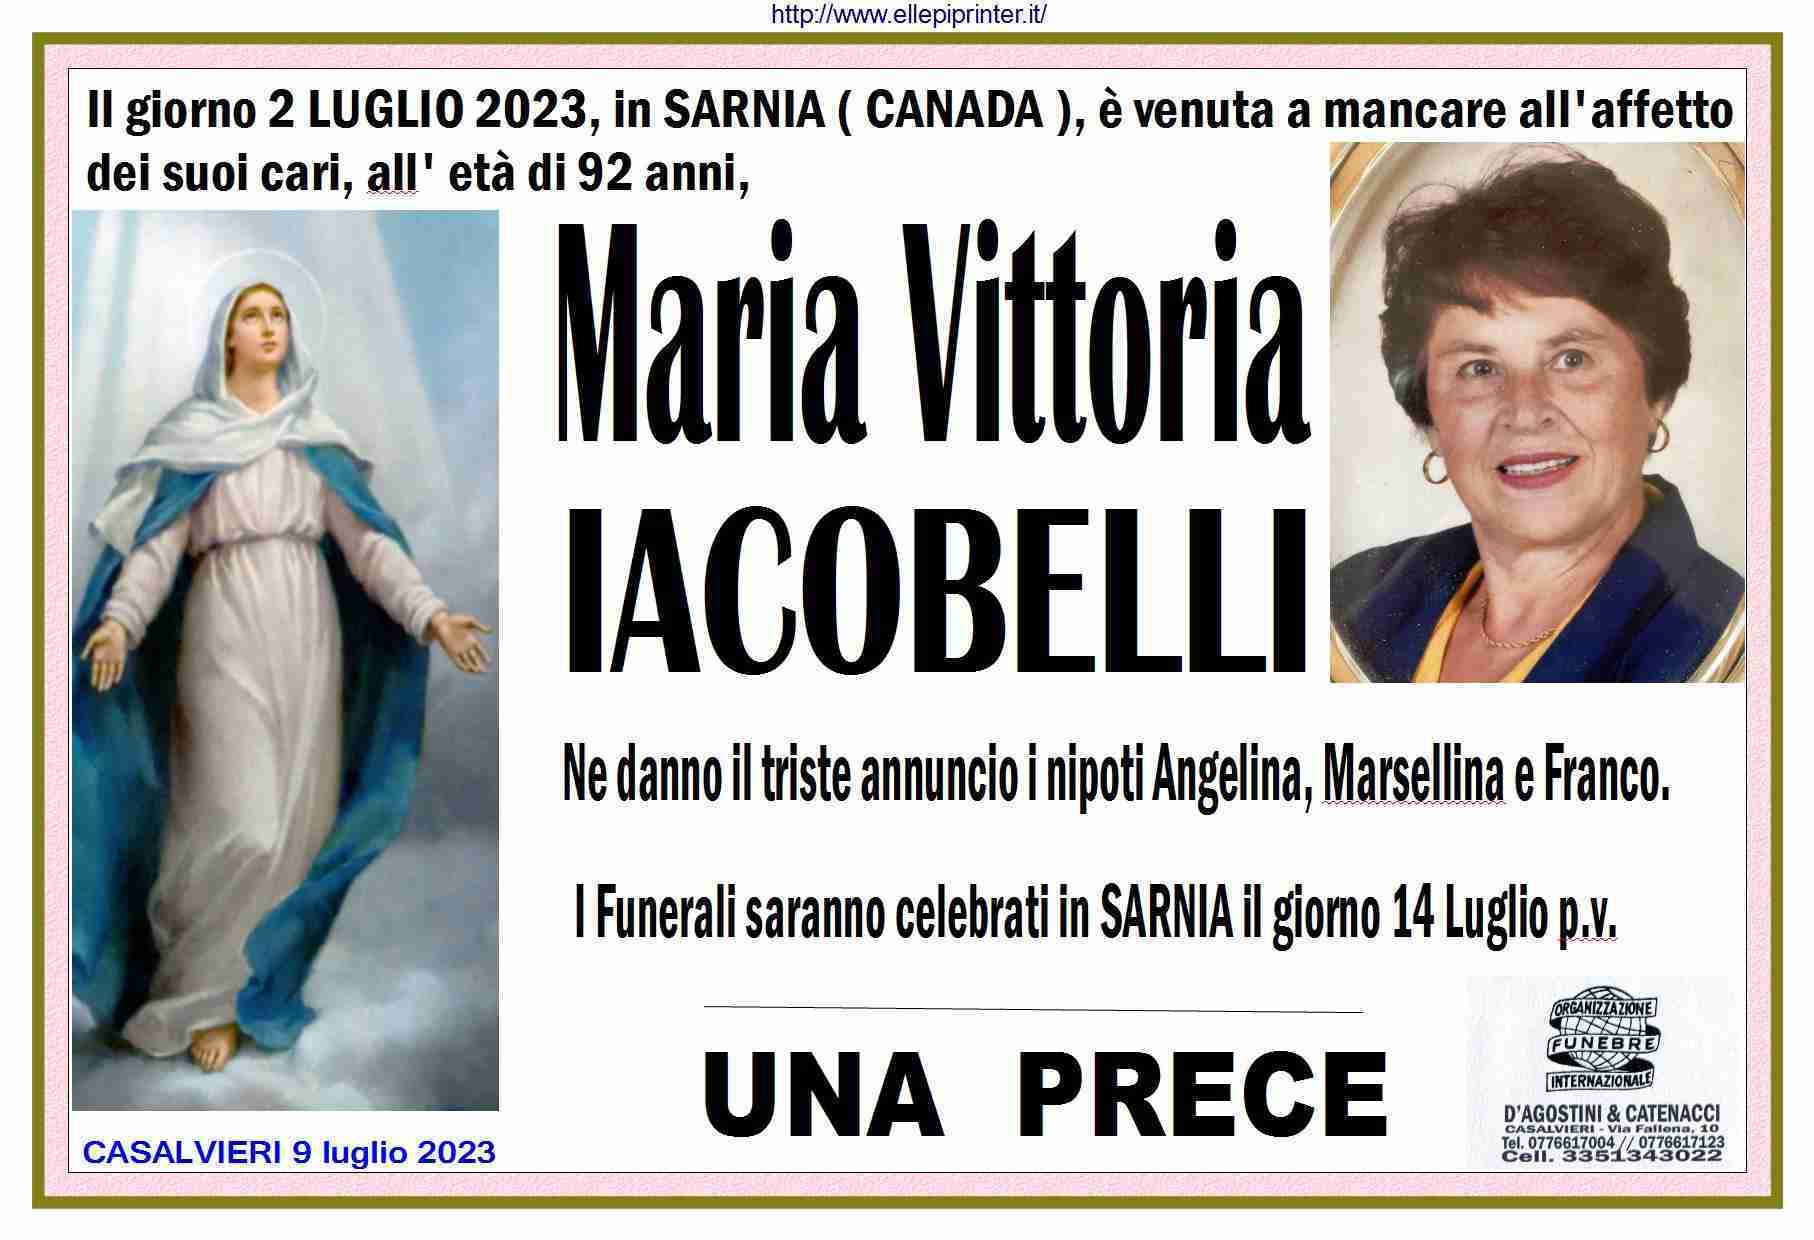 Maria Vittoria Iacobelli